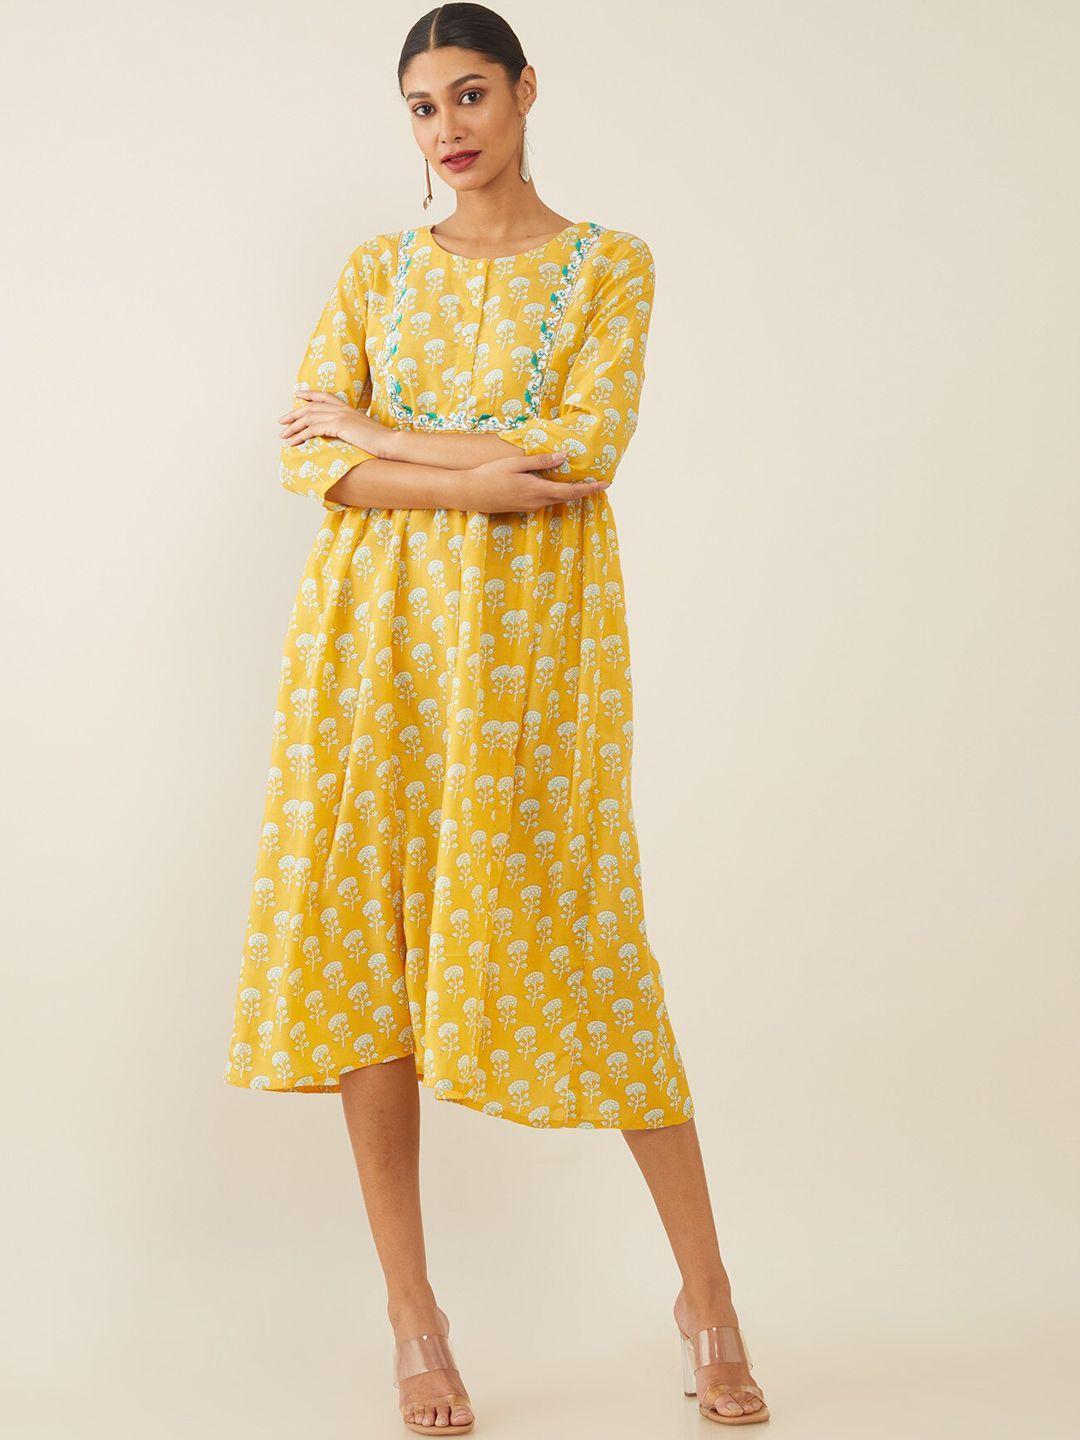 soch-mustard-yellow-ethnic-motifs-ethnic-a-line-midi-dress